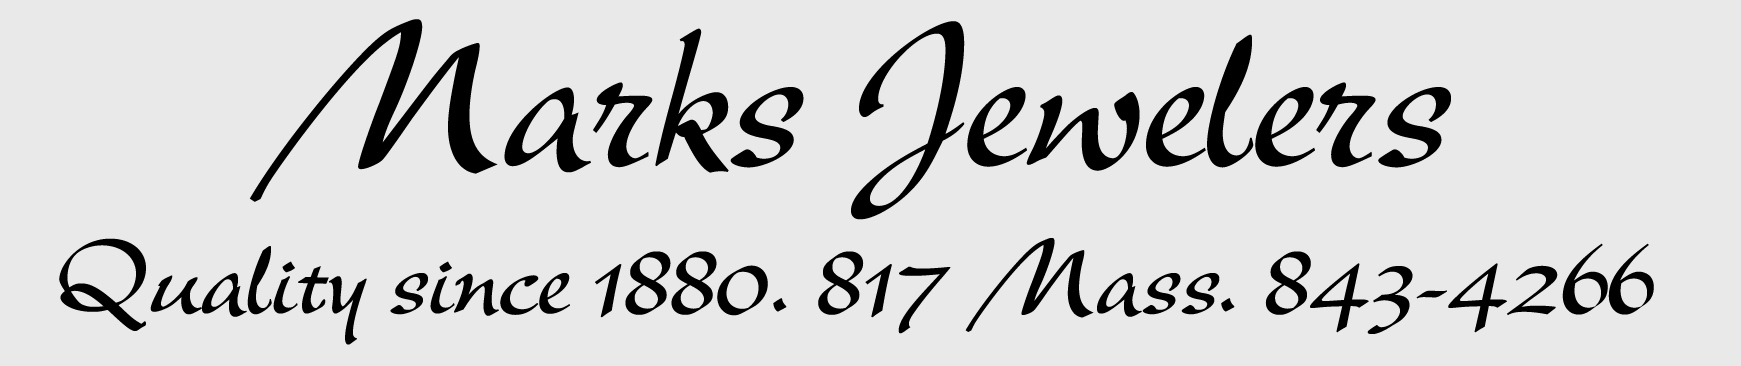 Marks Jewelers, Inc.